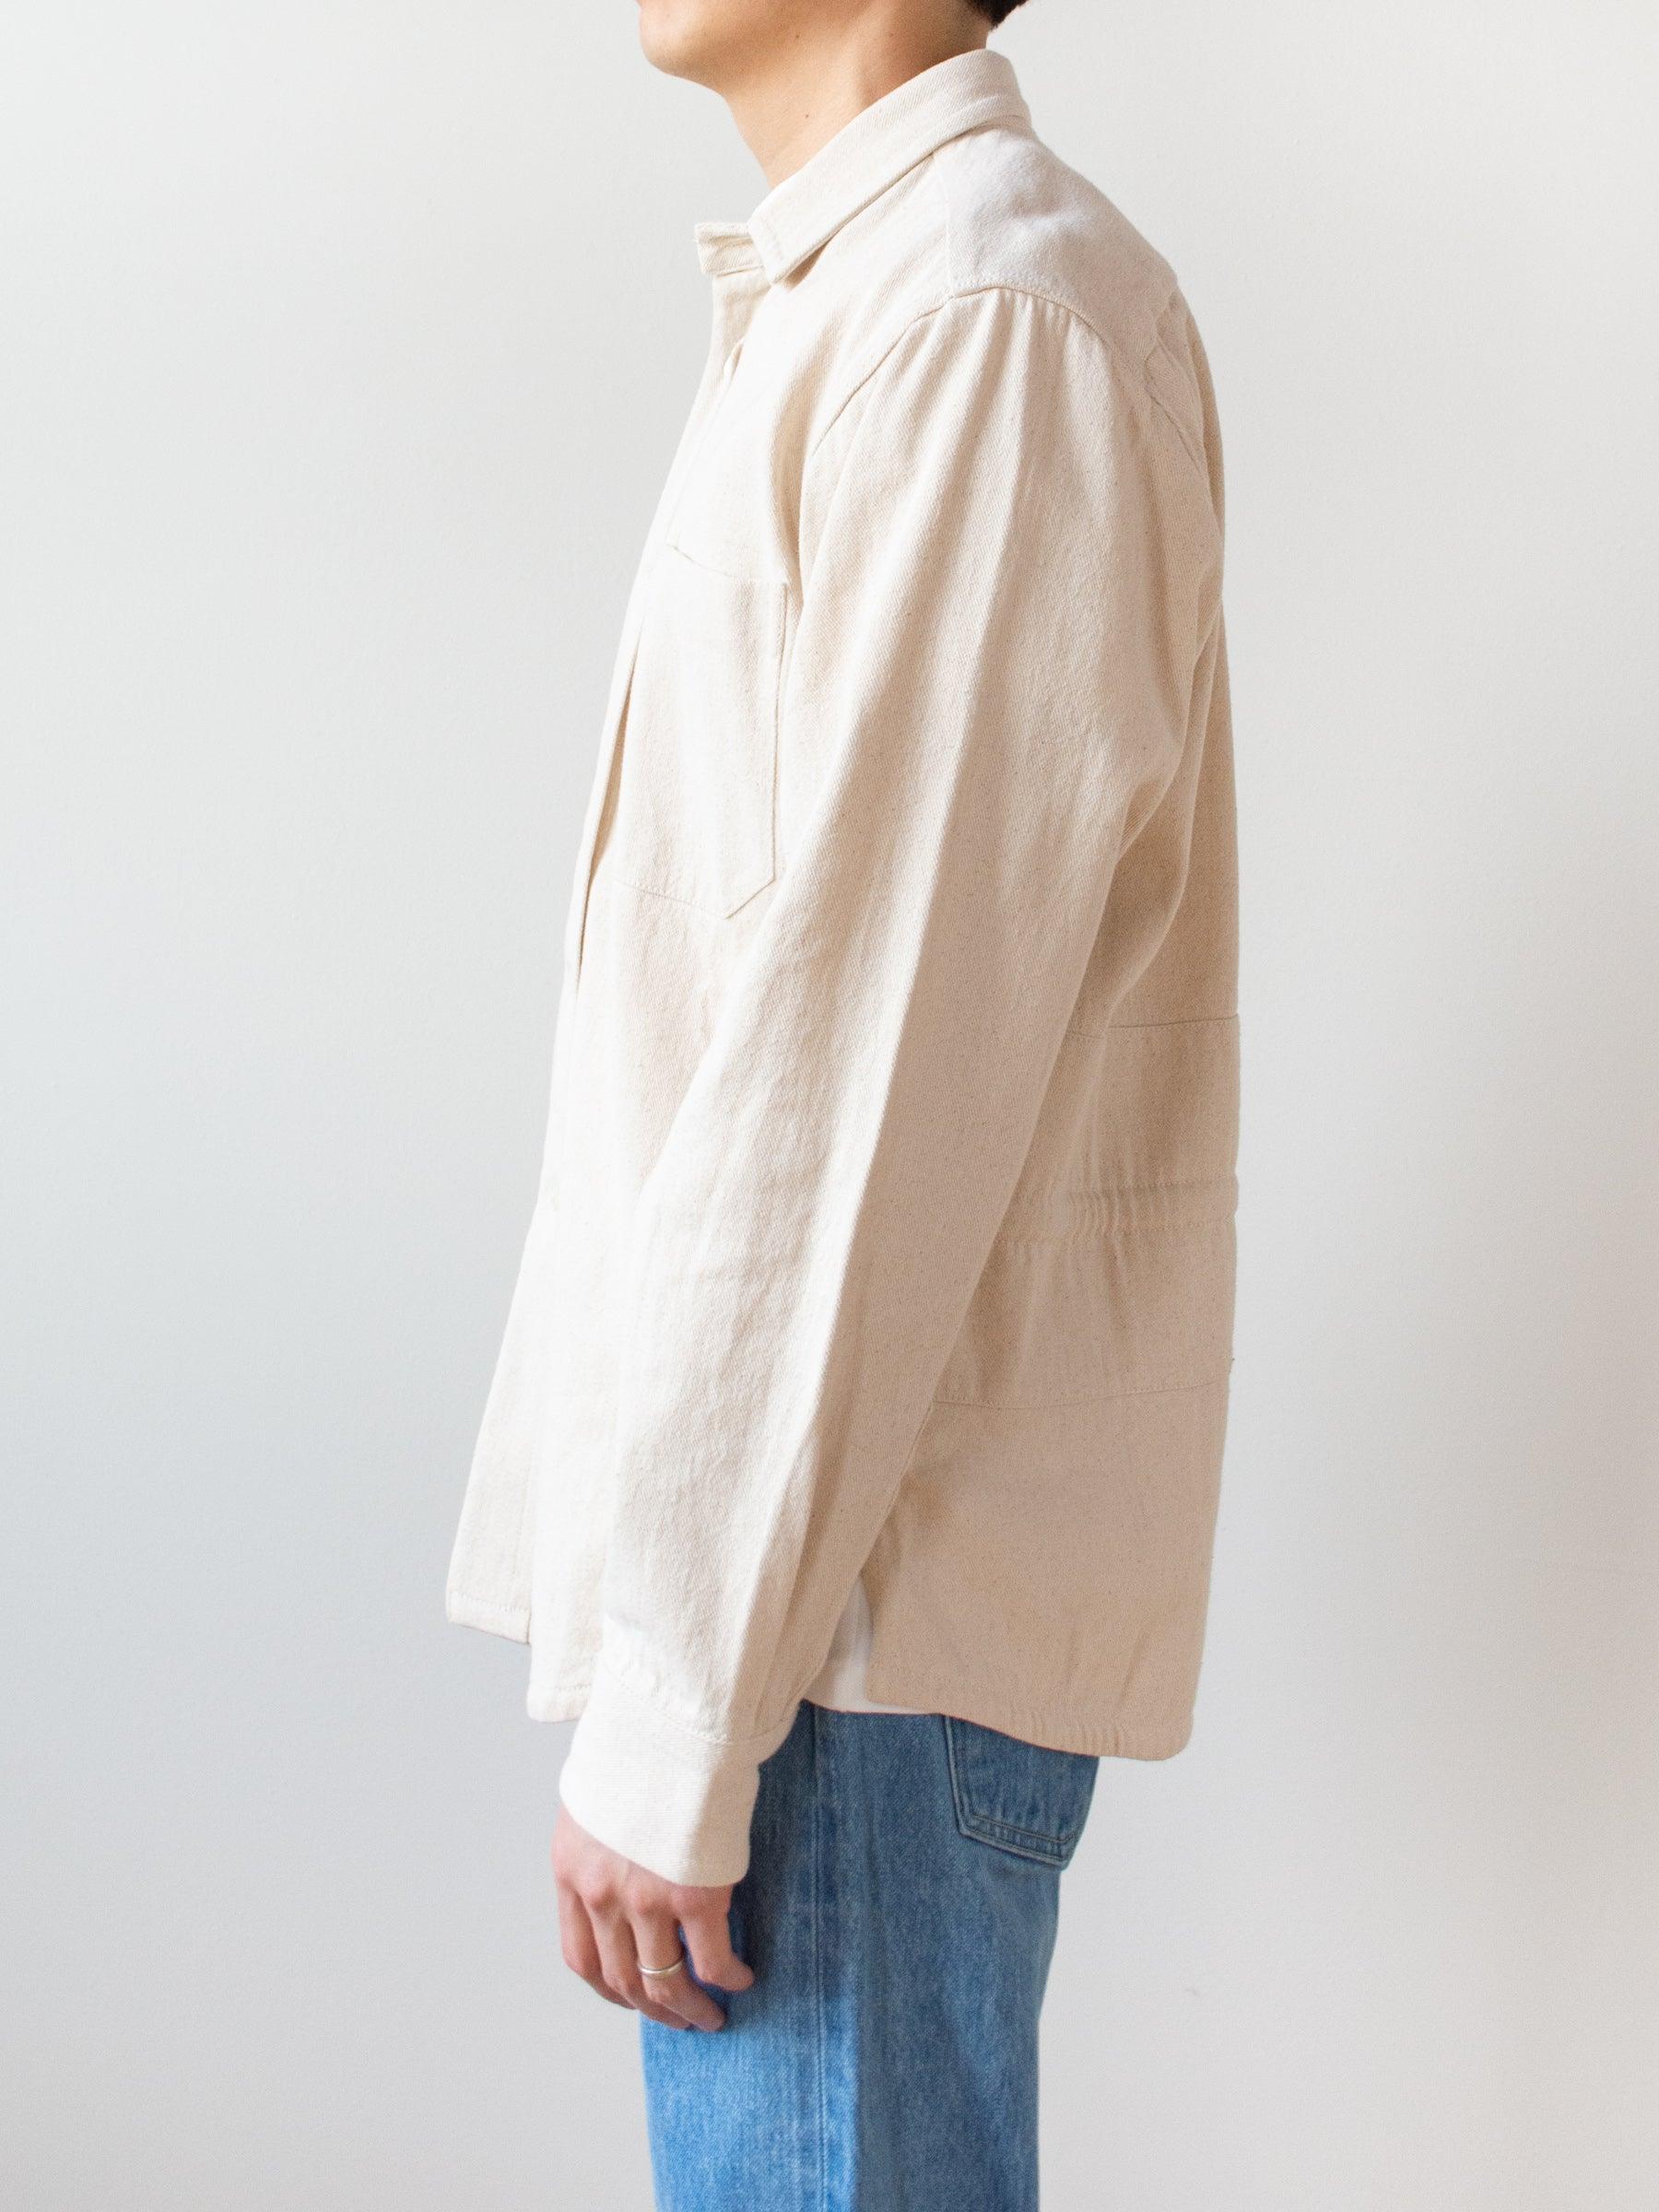 Namu Shop - Jan Machenhauer Coi Shirt - Natural Cotton Heavy Twill